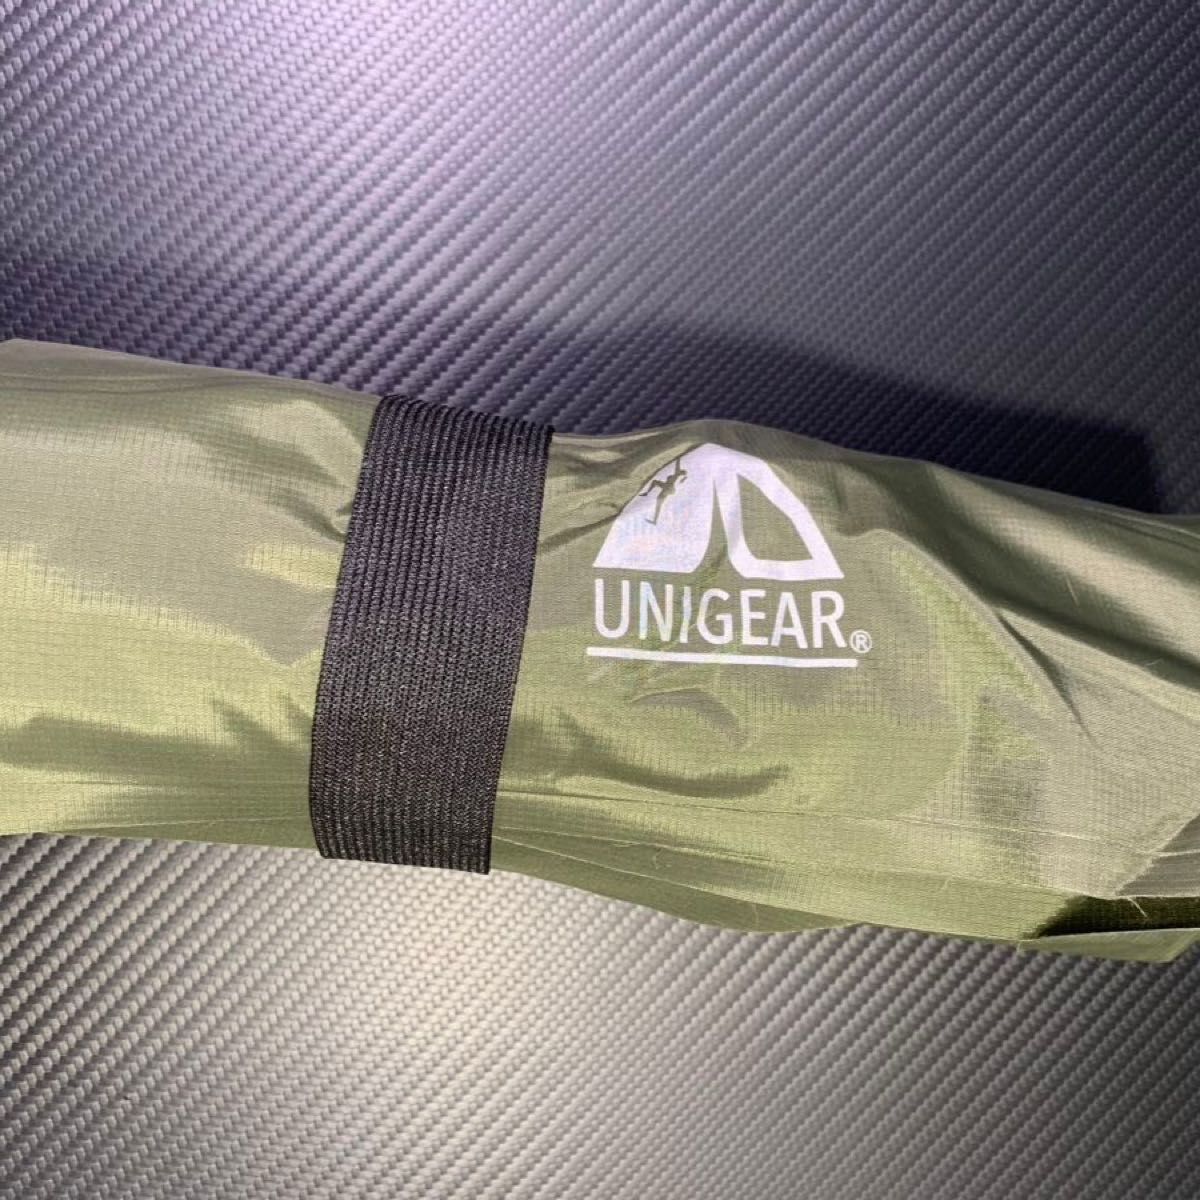 Unigear エアマット テントマット 超軽量 コンパクト 防水 防潮 寝袋 キャンプ/車中泊/アウトドア/防災用 収納袋付き